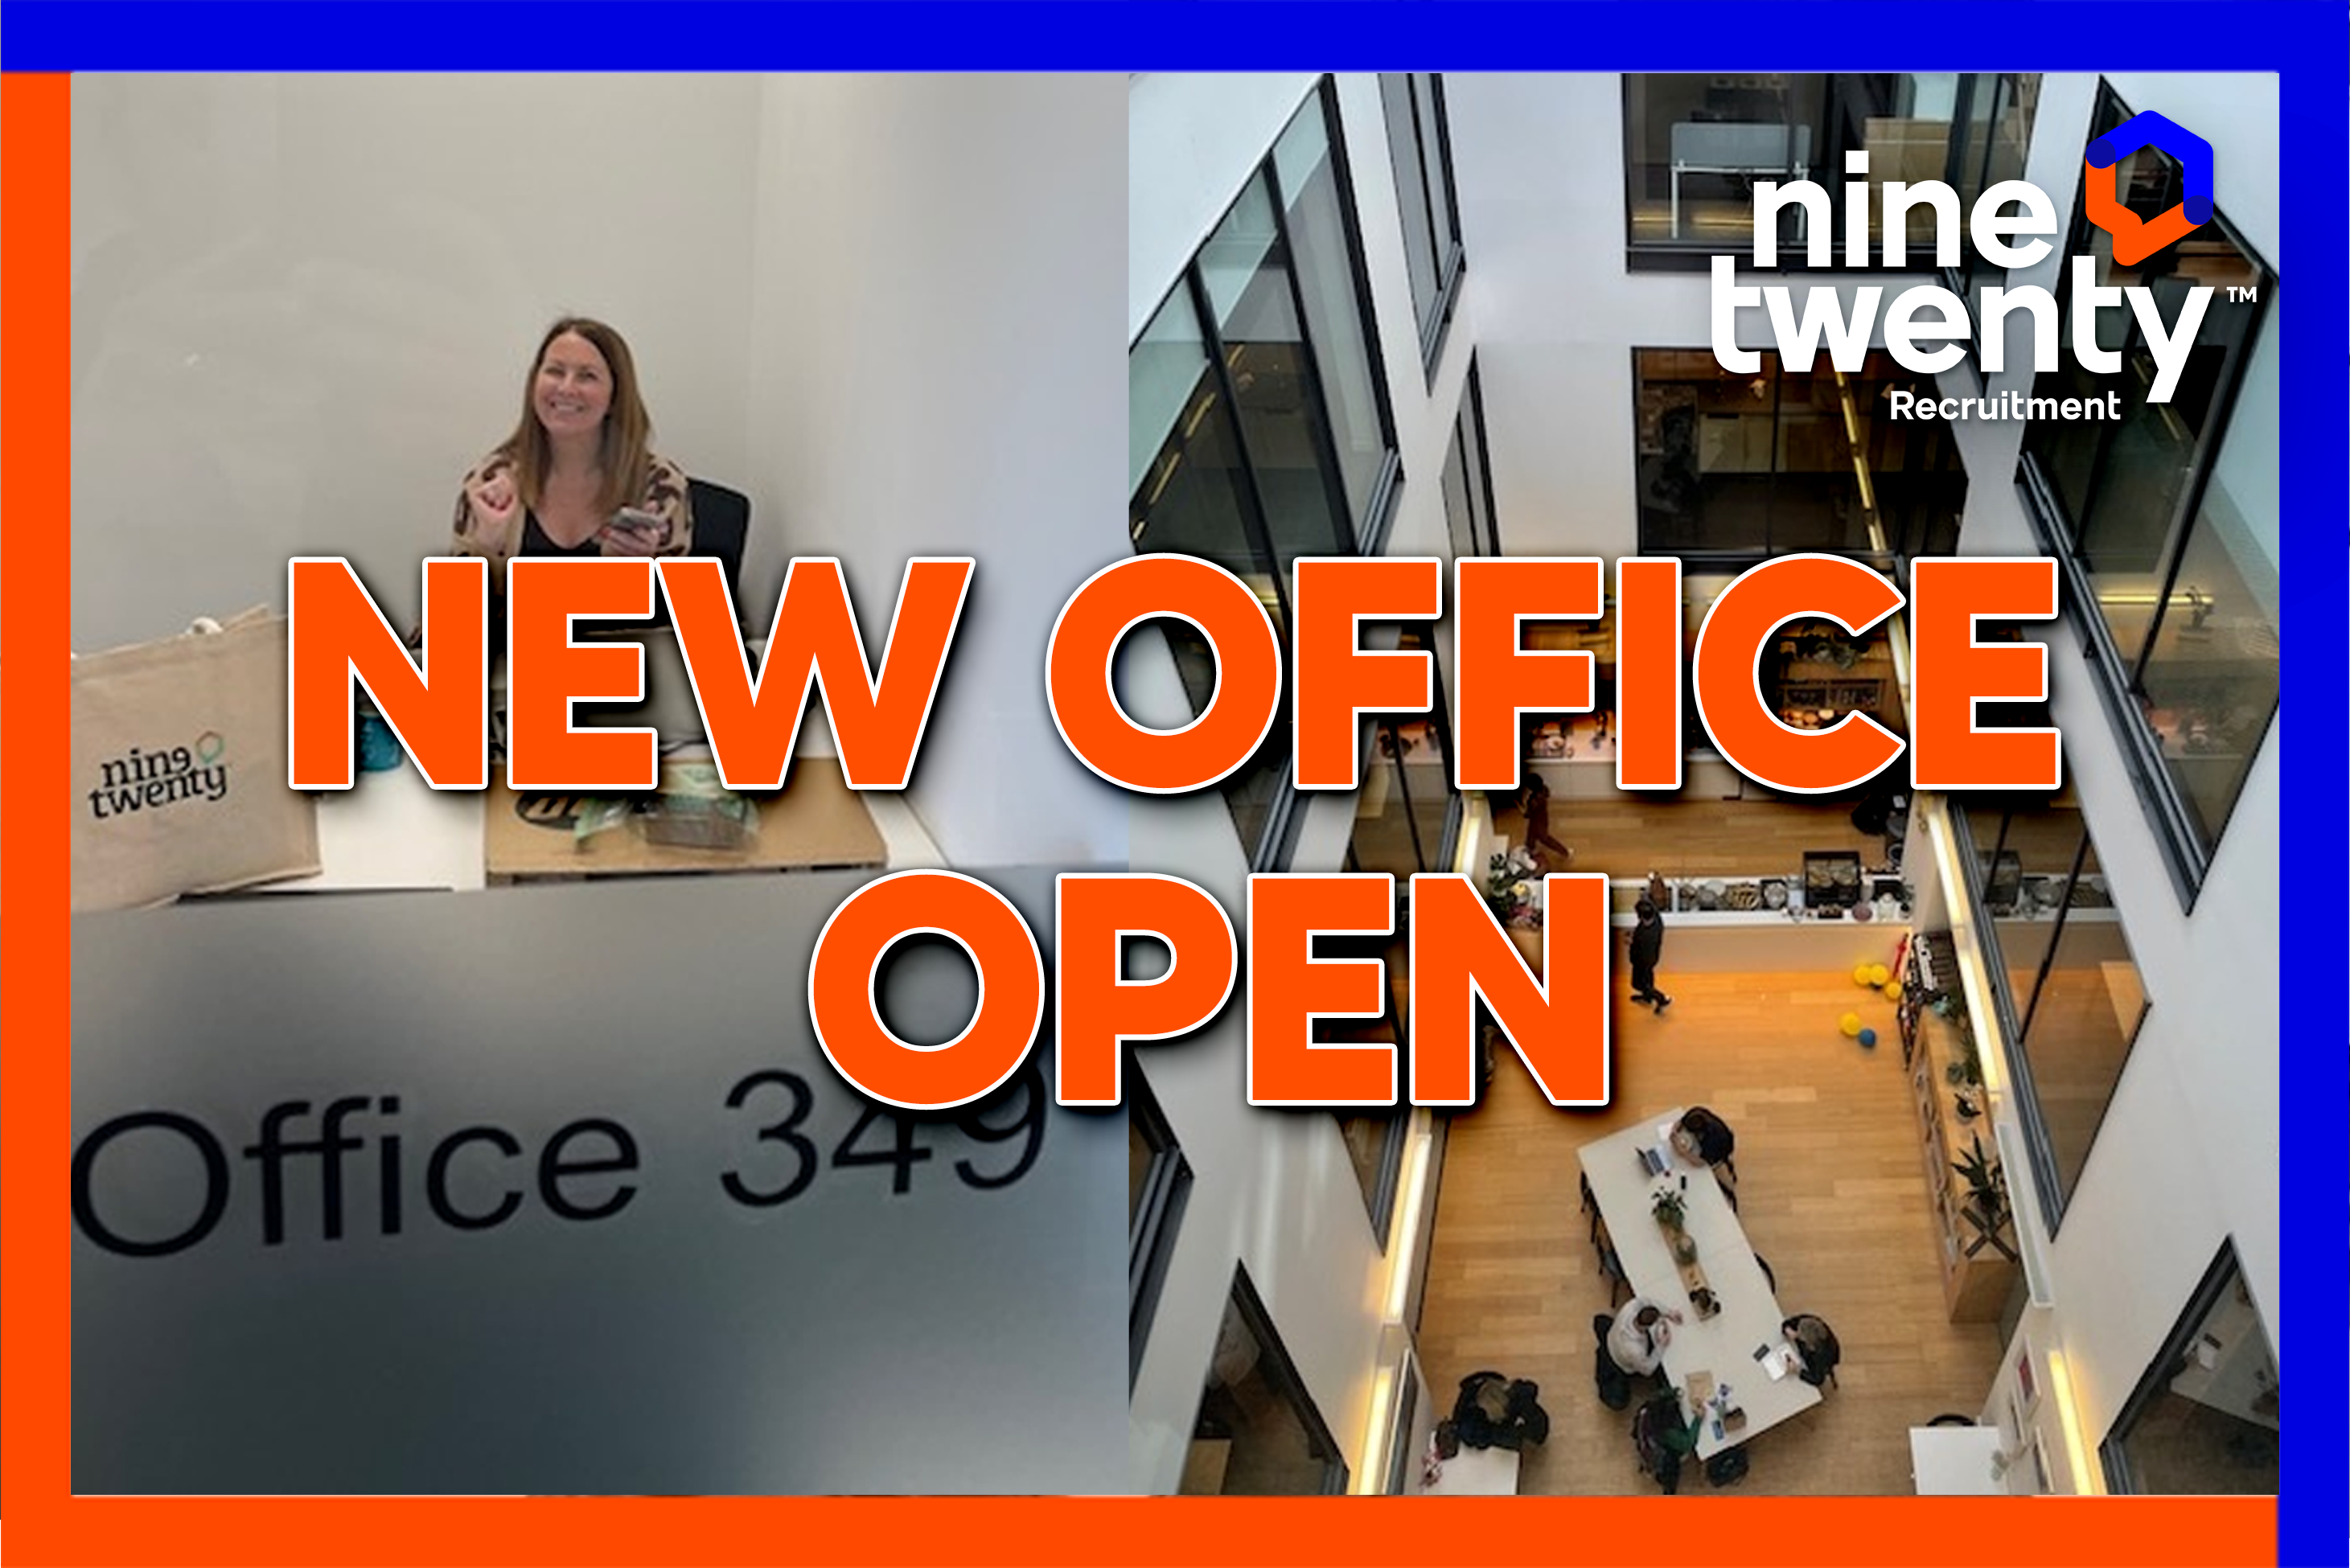 Edinburgh | Our New Office